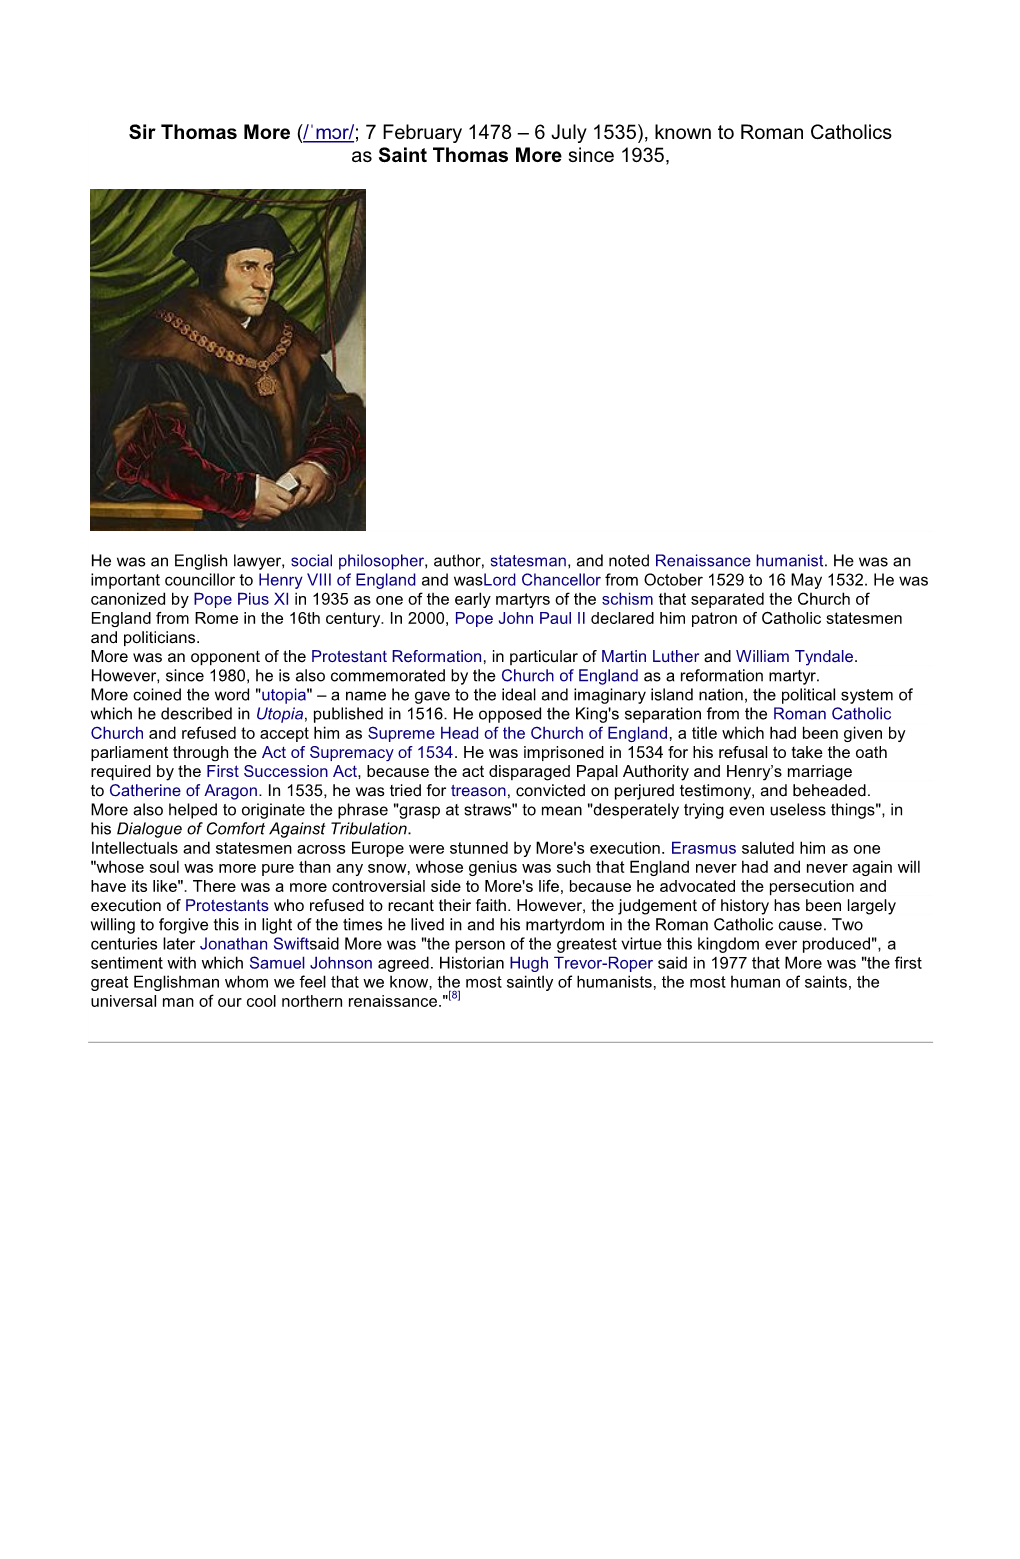 Sir Thomas More (/ˈmɔr/; 7 February 1478 – 6 July 1535), Known to Roman Catholics As Saint Thomas More Since 1935